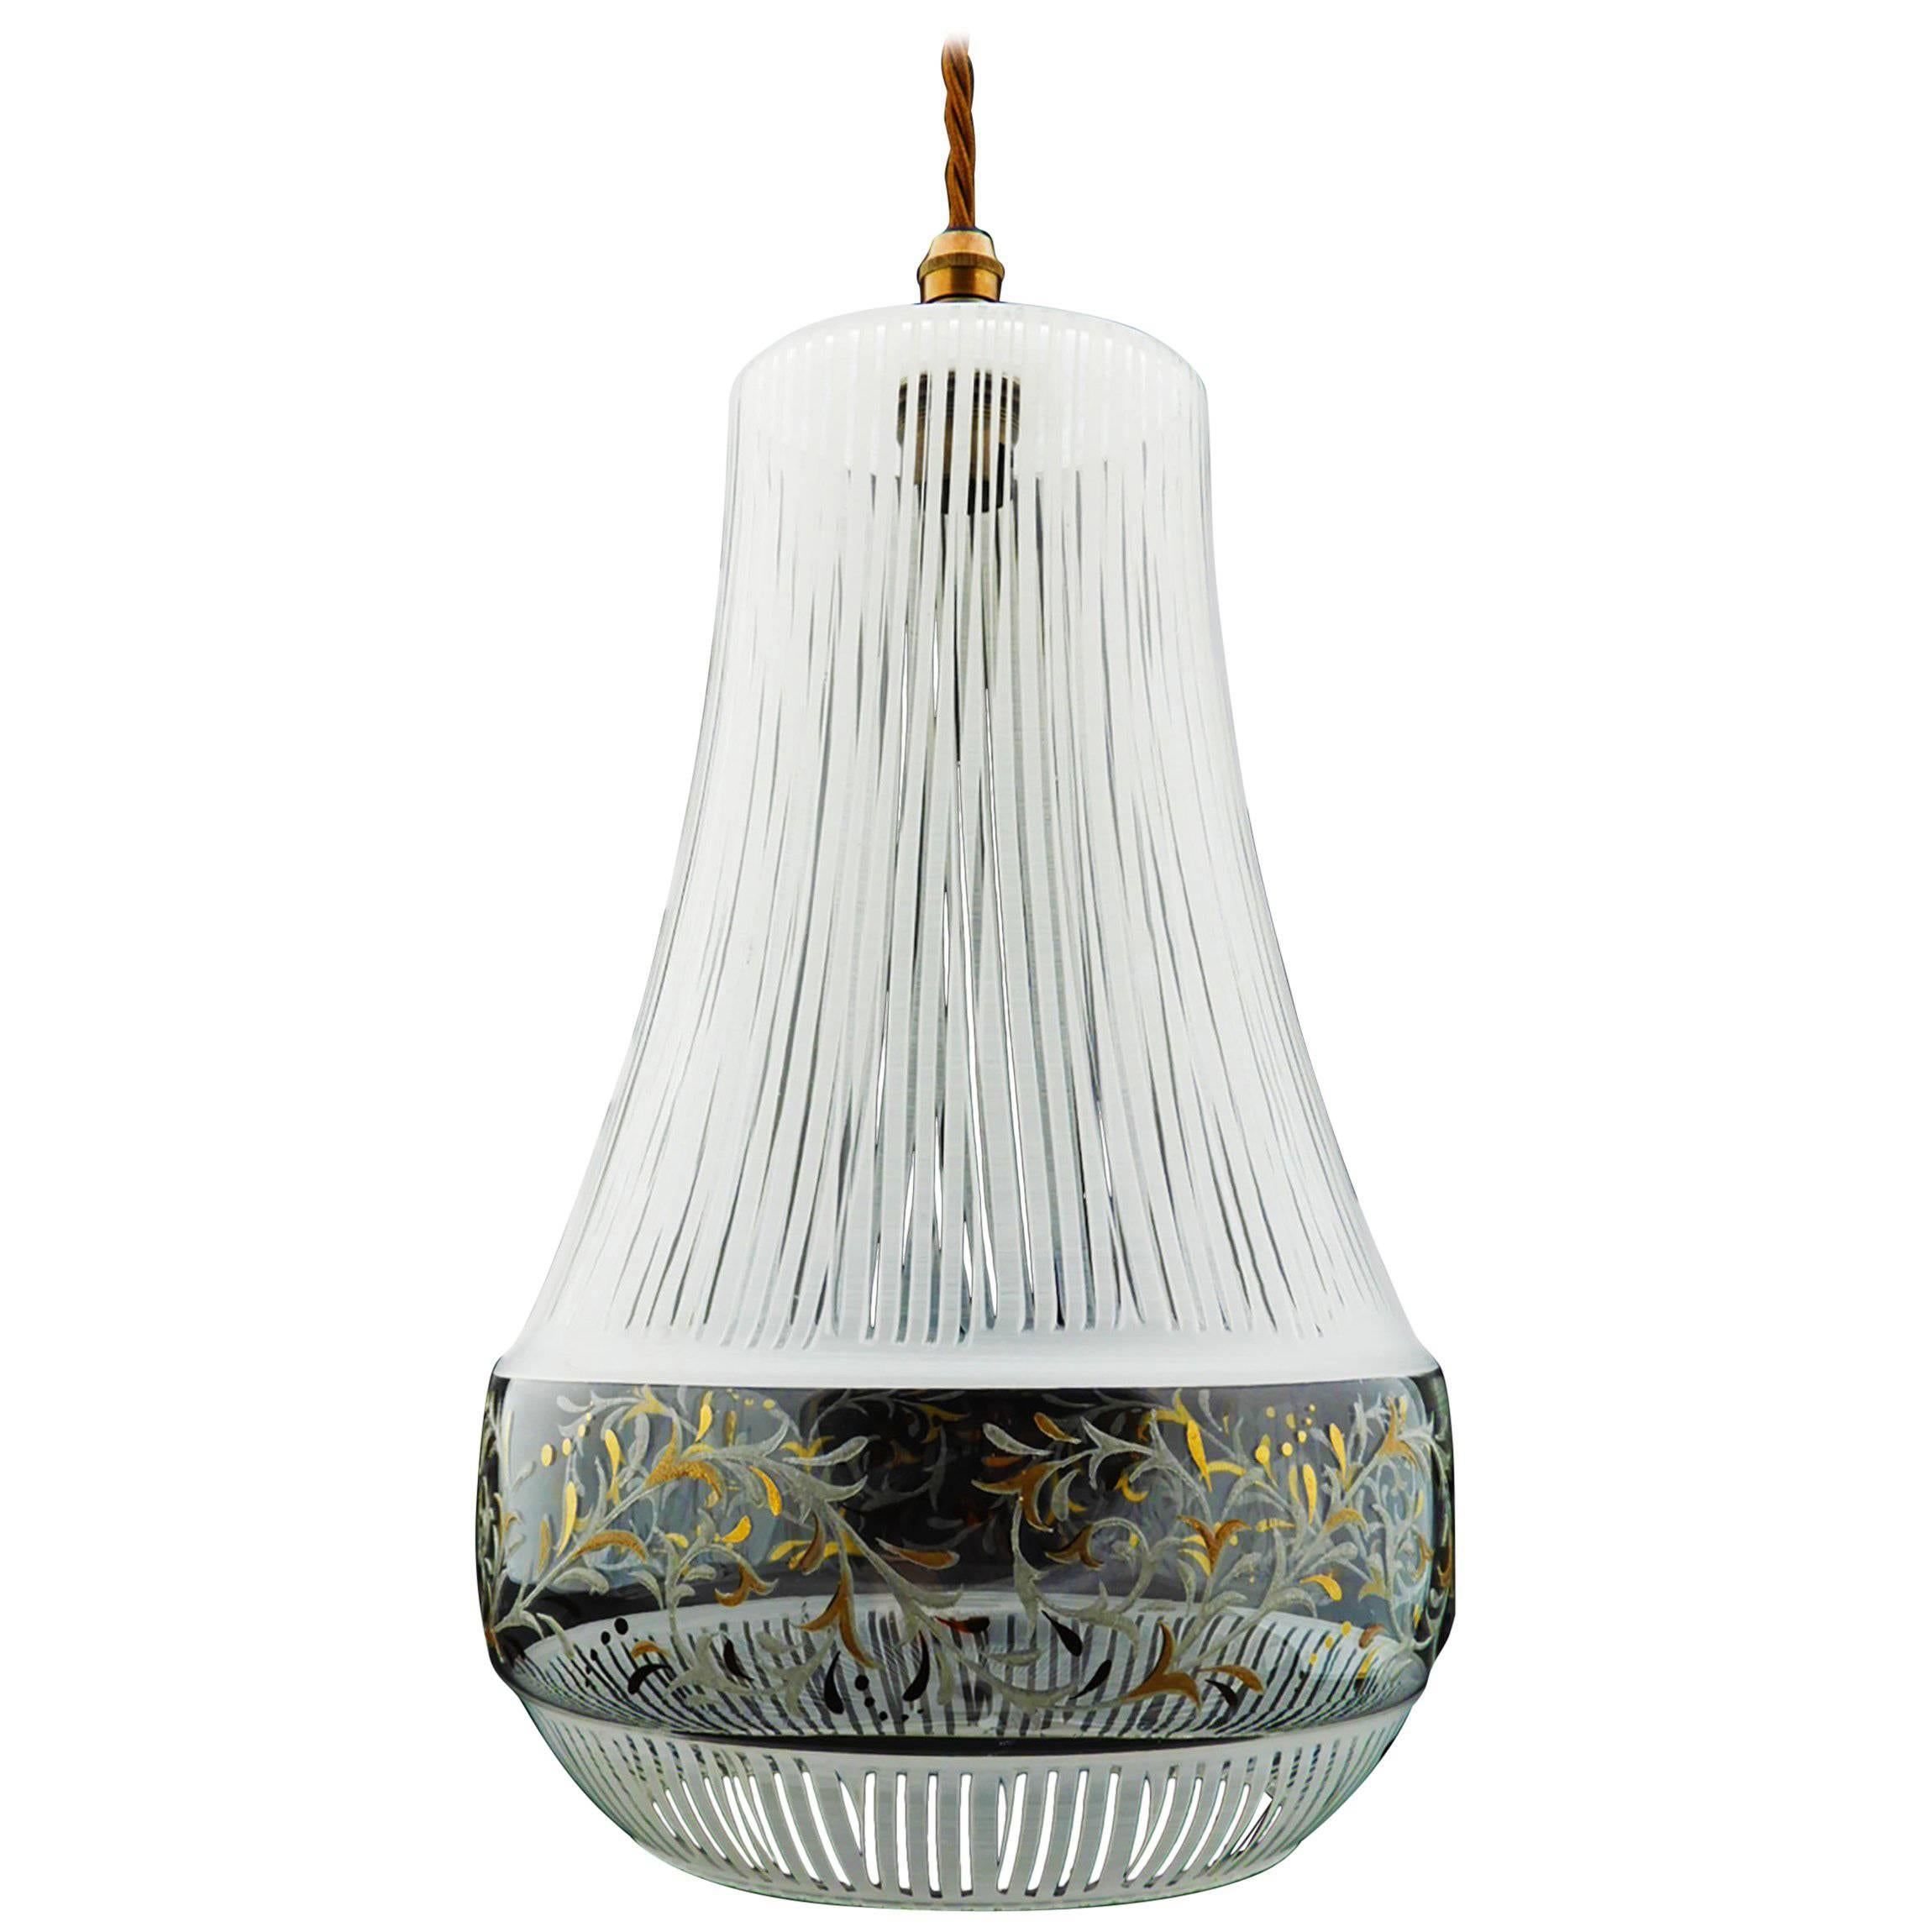 Midcentury Pendant Light Decorative Glass French Ceiling Light, circa 1960s